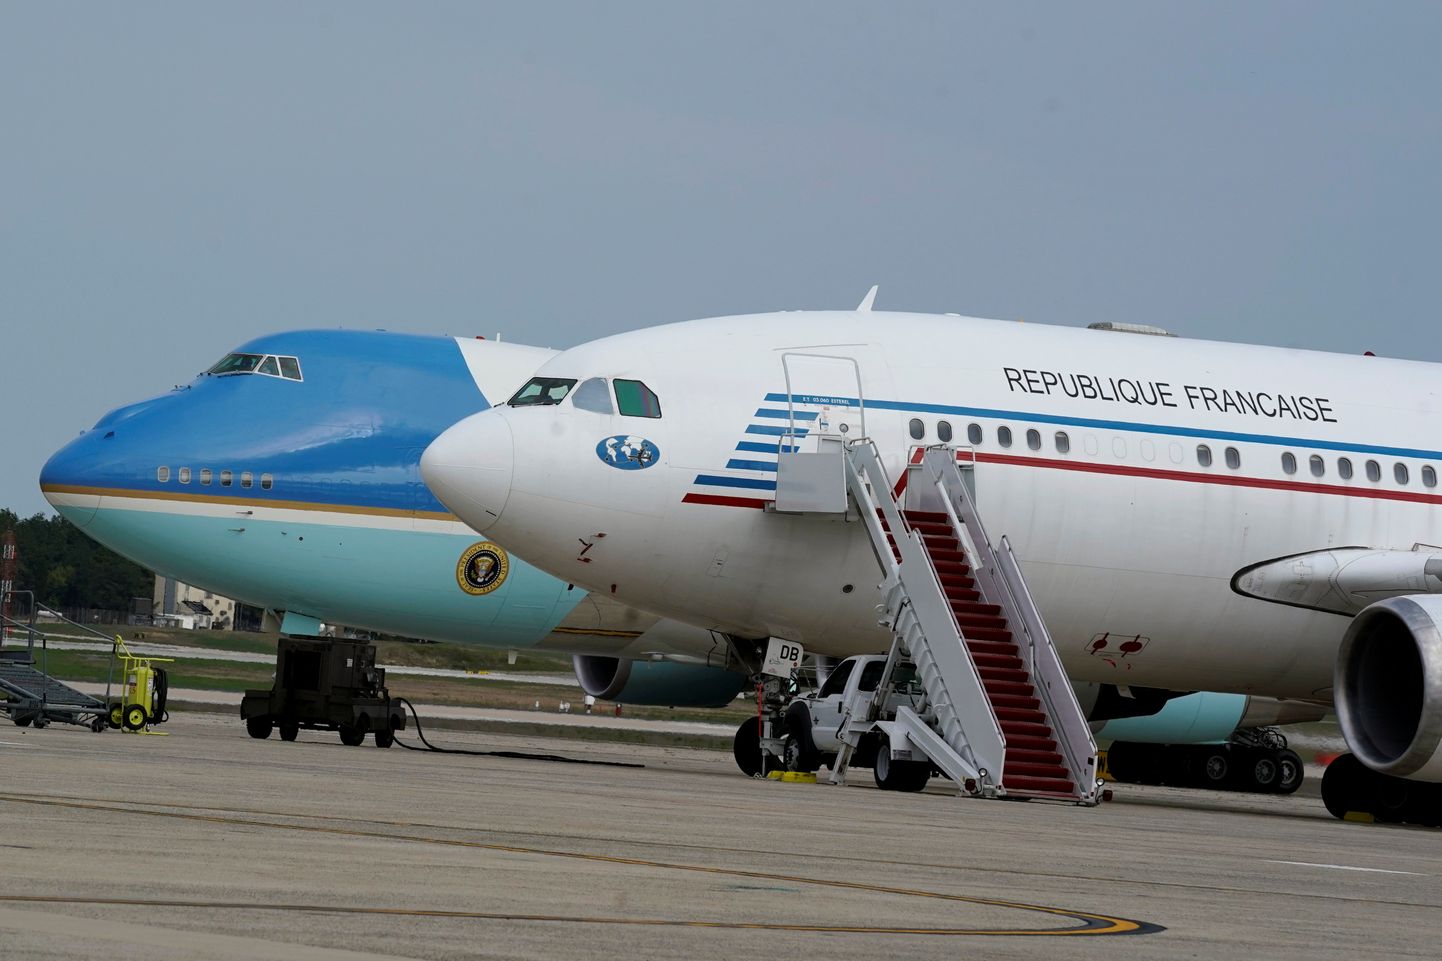 Prantsuse presidendi lennuk USA presidendi lennuki kõrval.